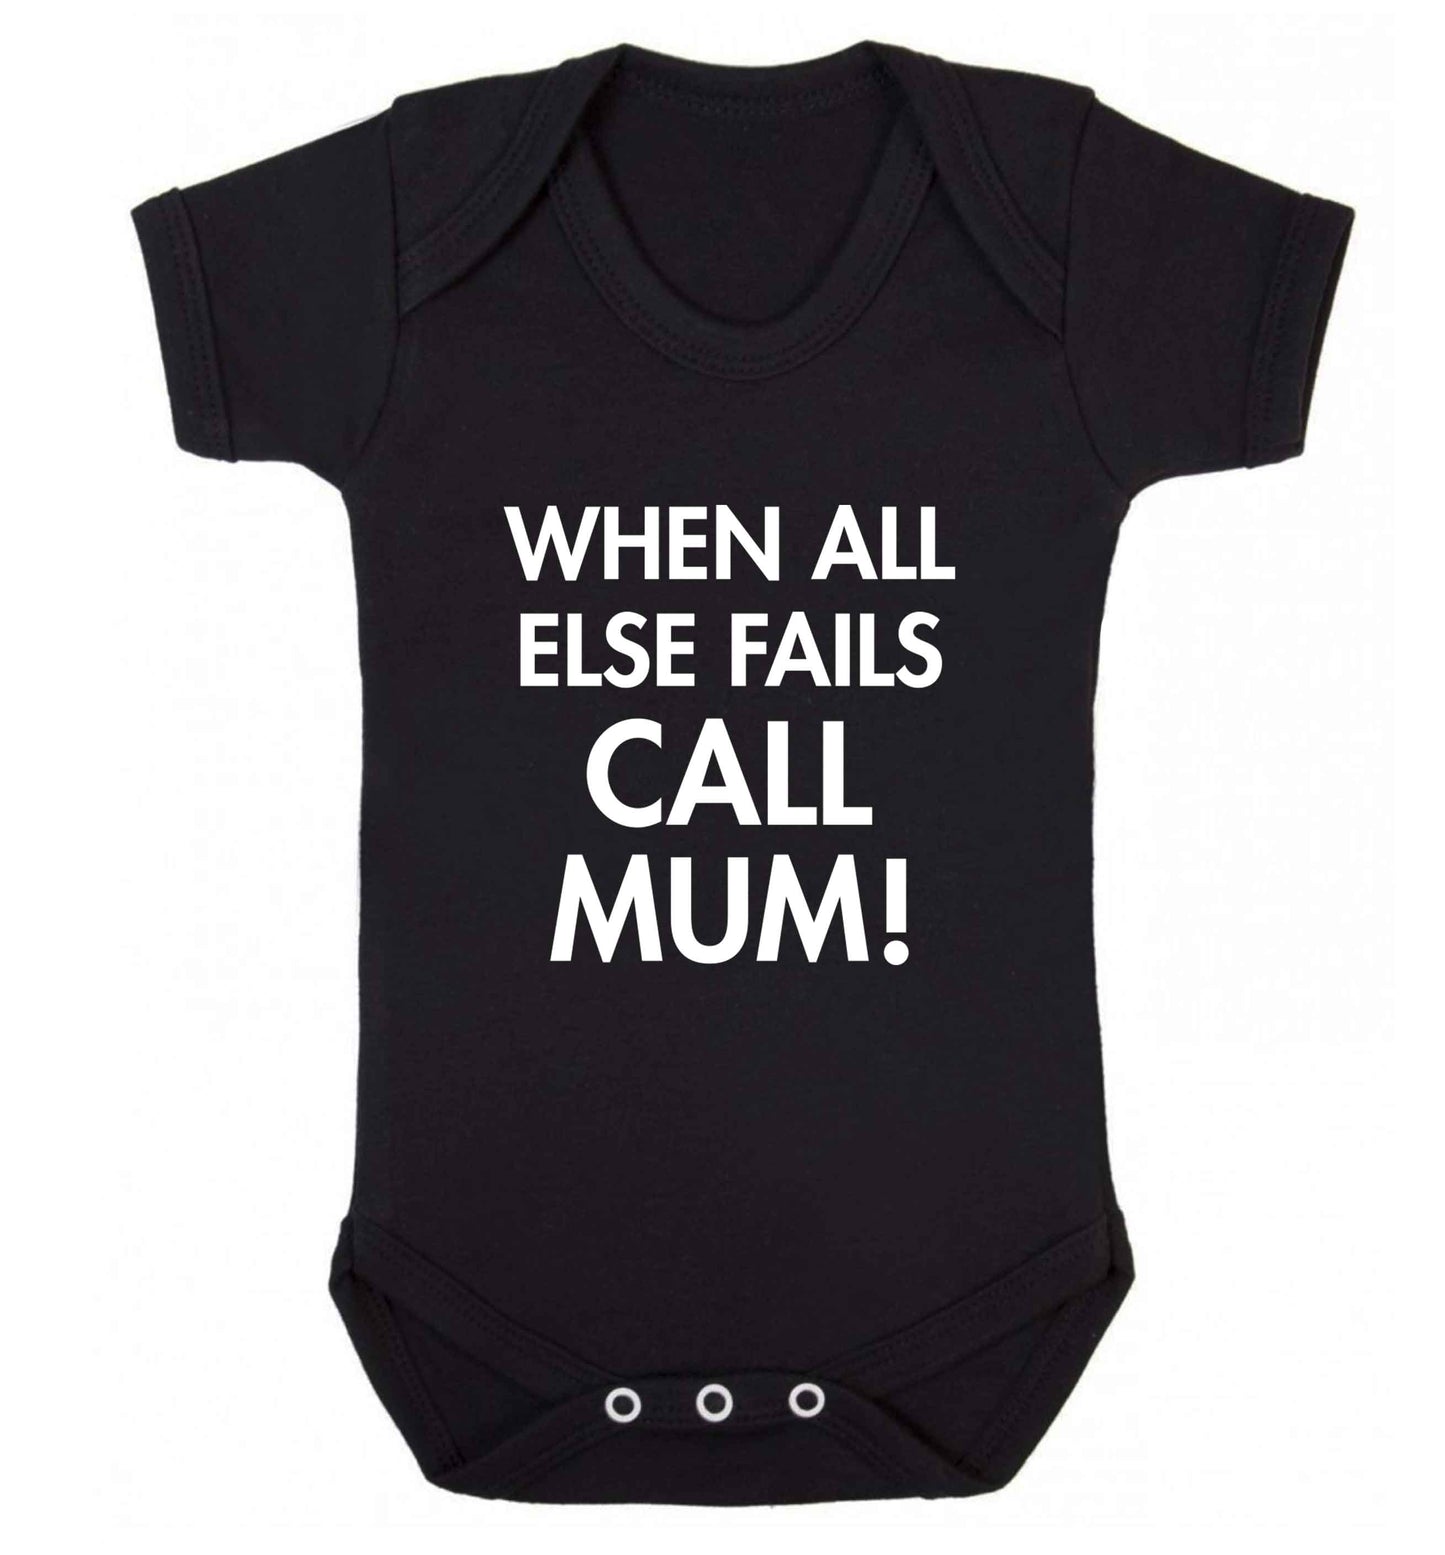 When all else fails call mum! baby vest black 18-24 months